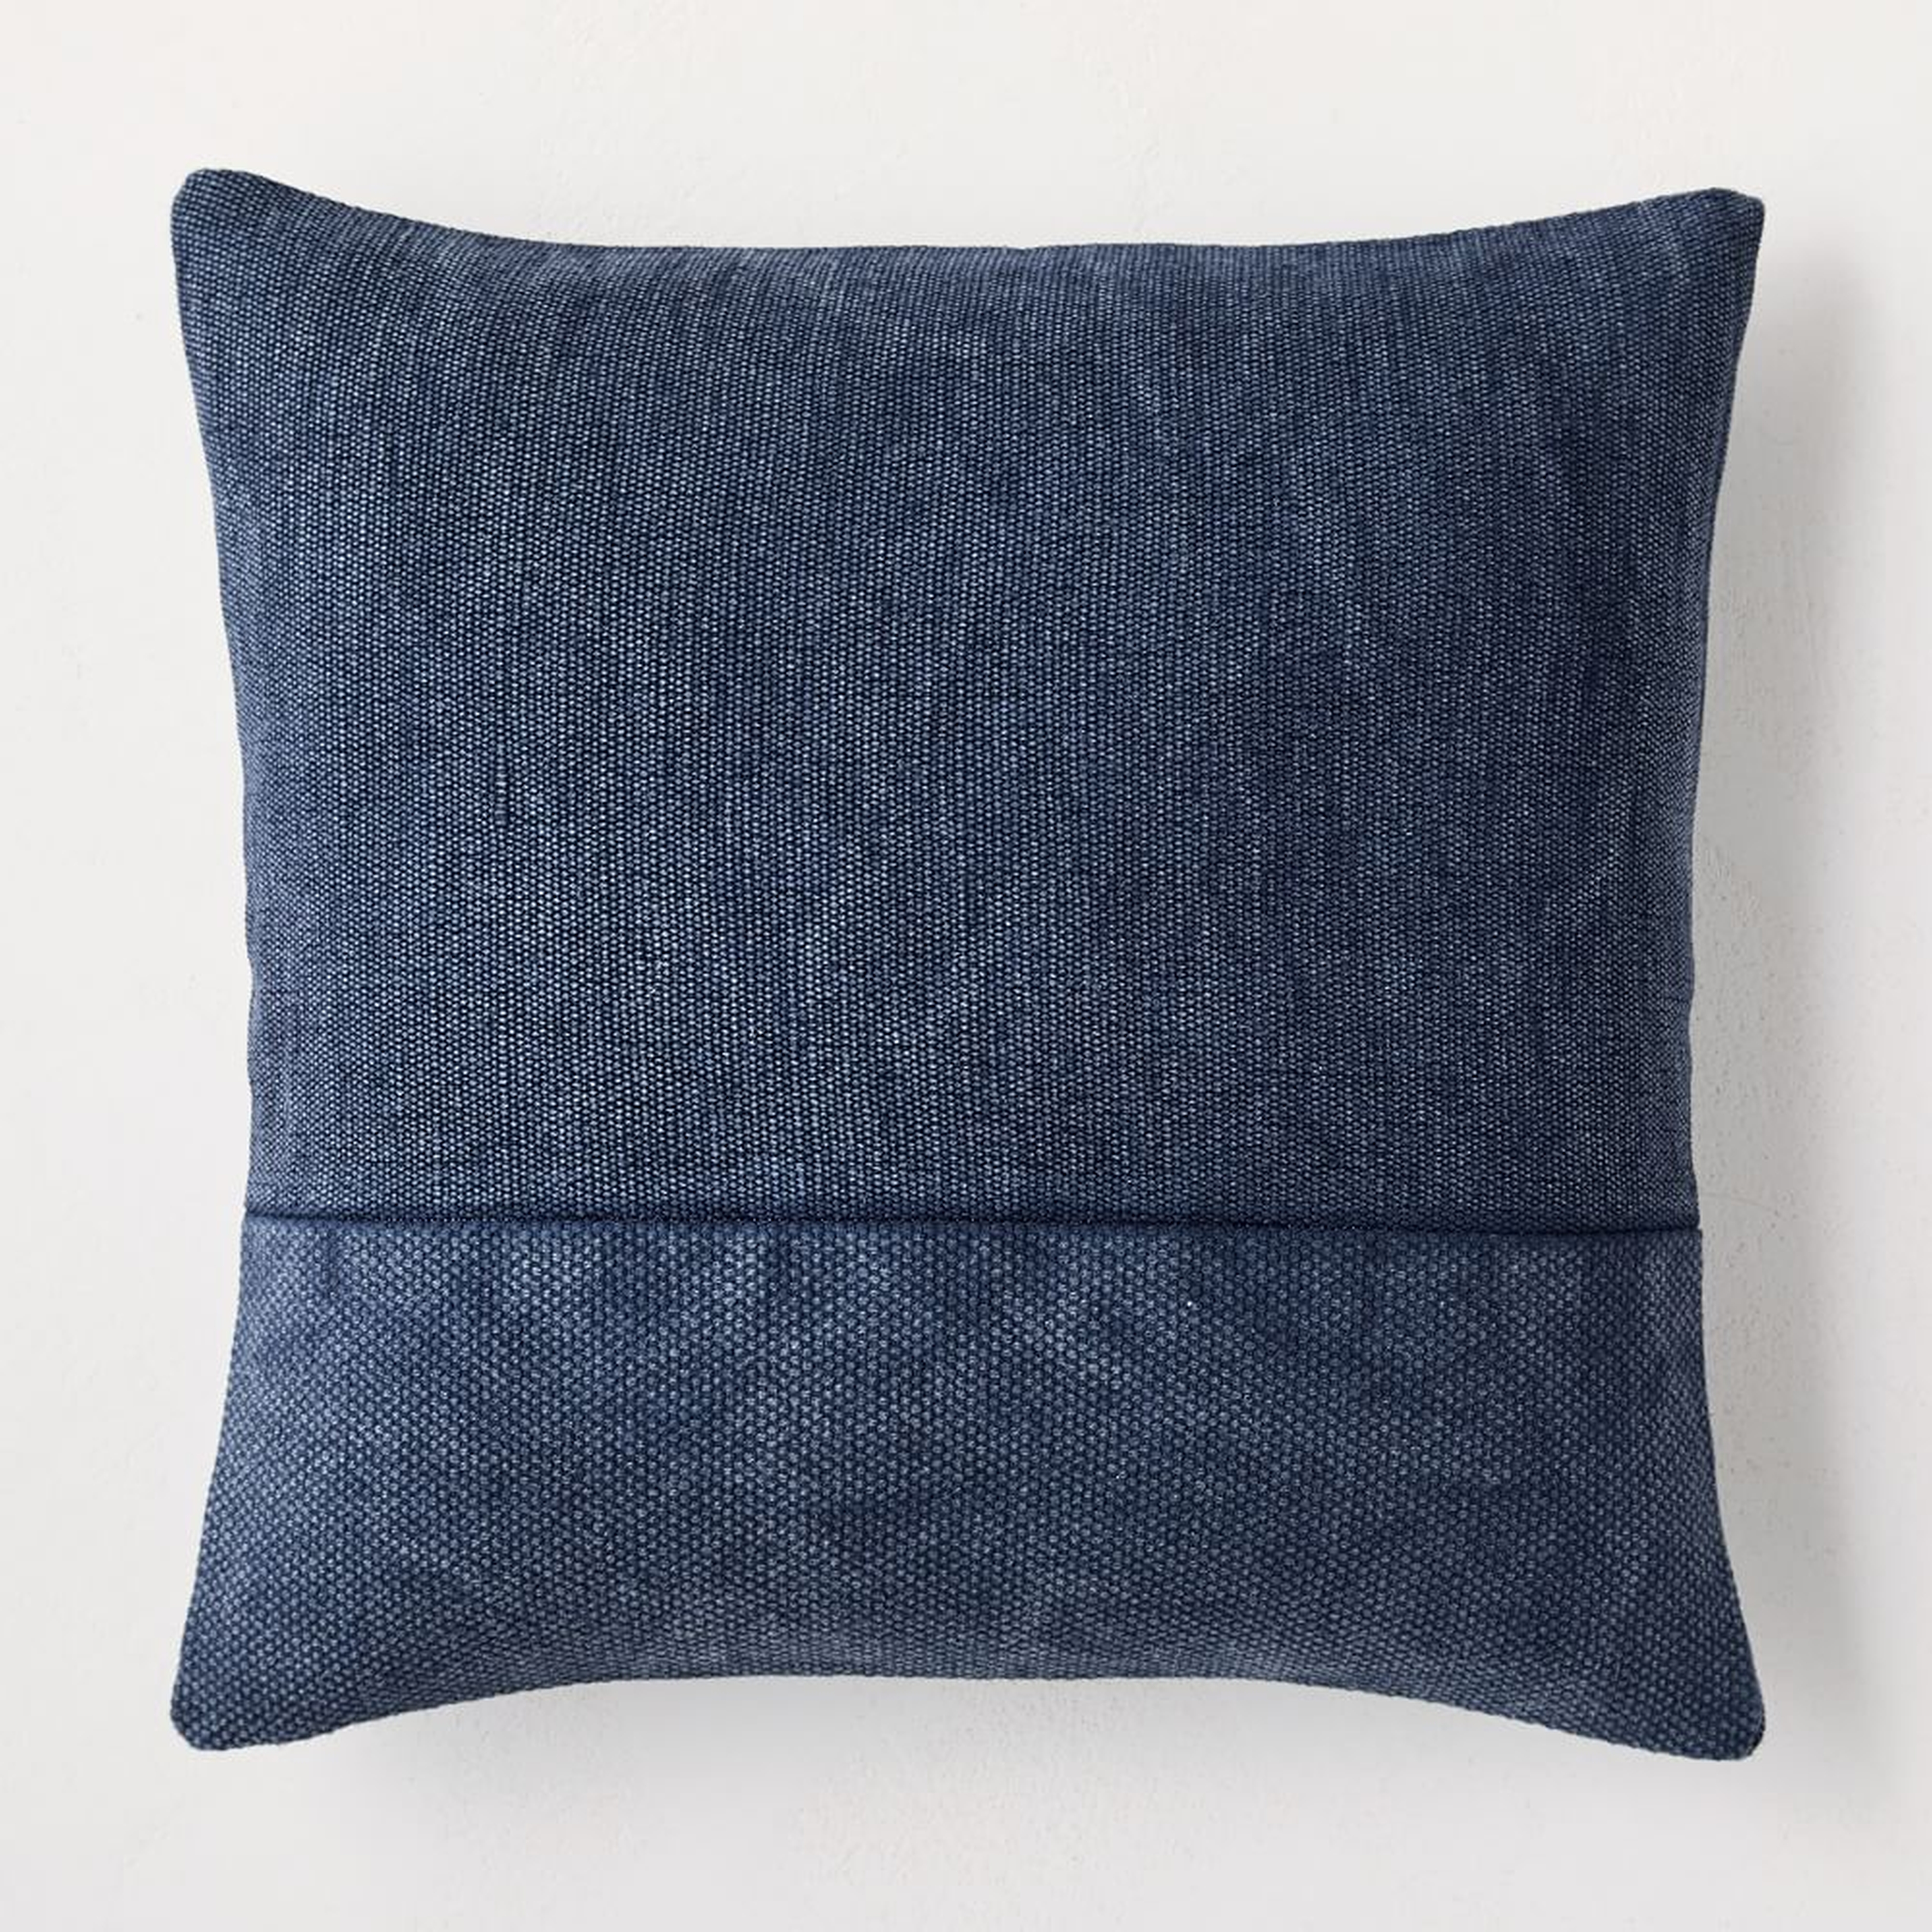 Cotton Canvas Pillow Cover, 18"x18", Midnight - West Elm